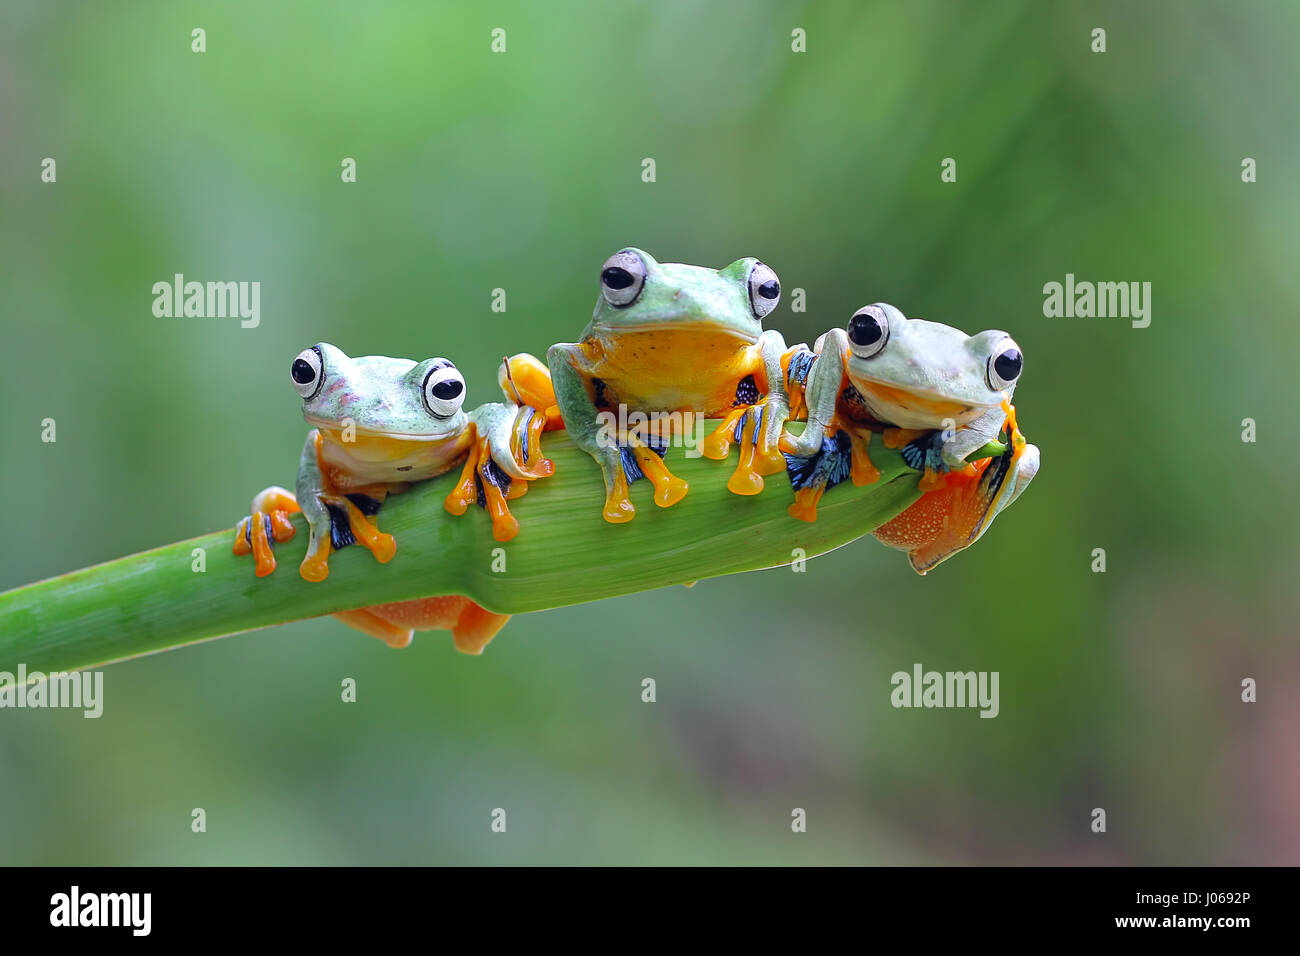 https://c8.alamy.com/comp/J0692P/jakarta-indonesia-cute-pictures-of-three-little-tree-frogs-enjoying-J0692P.jpg